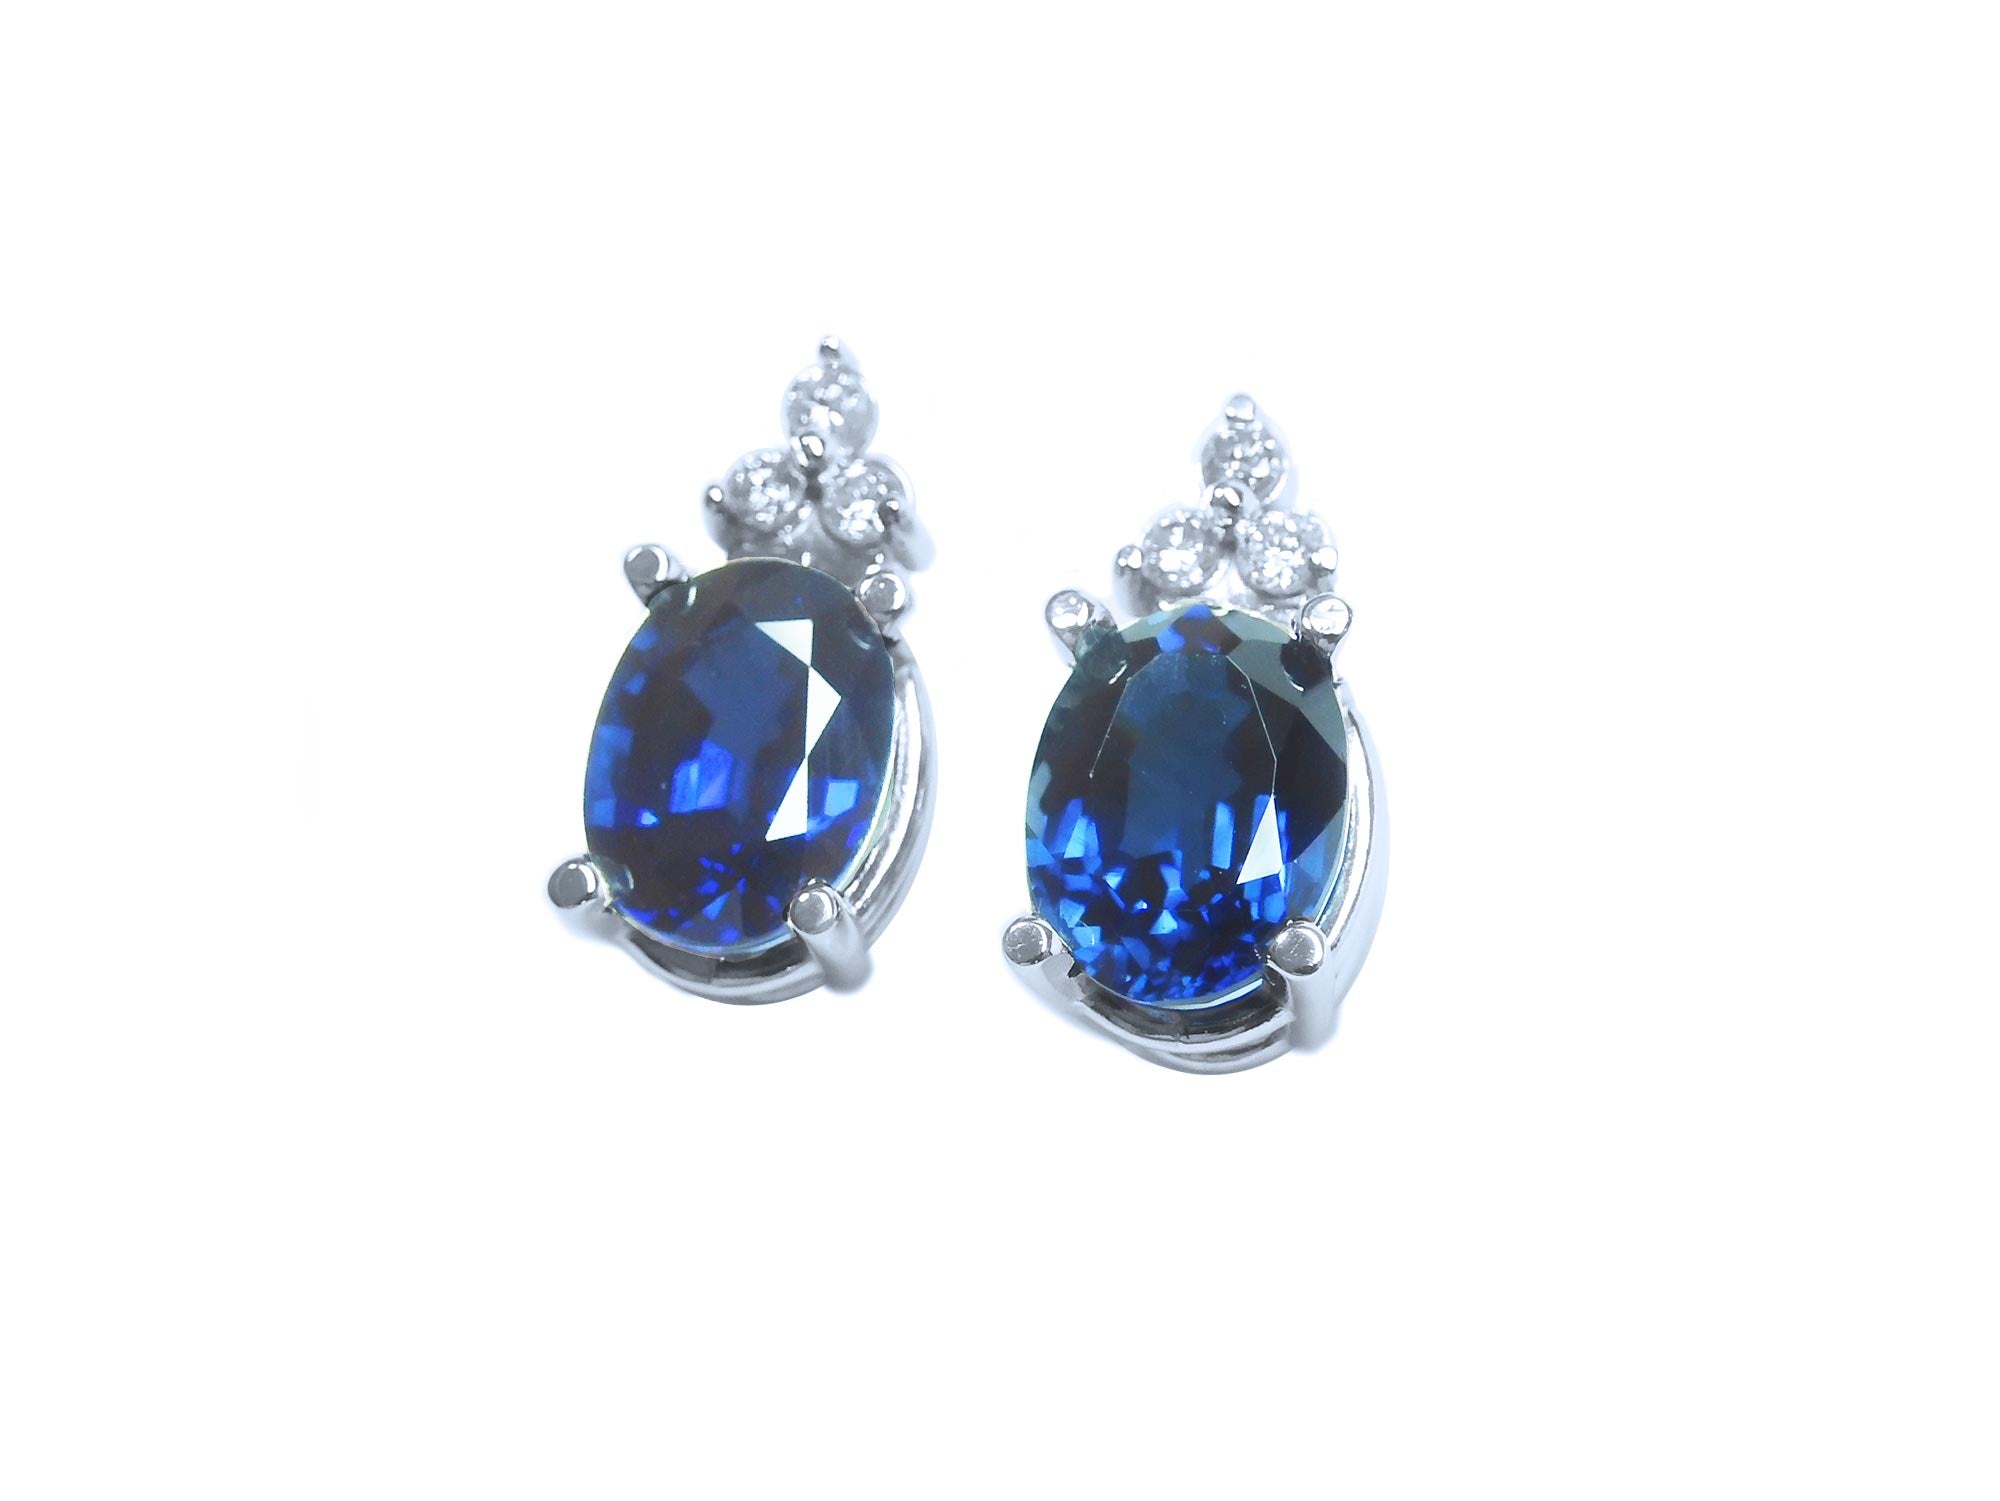 Genuine sapphire earrings